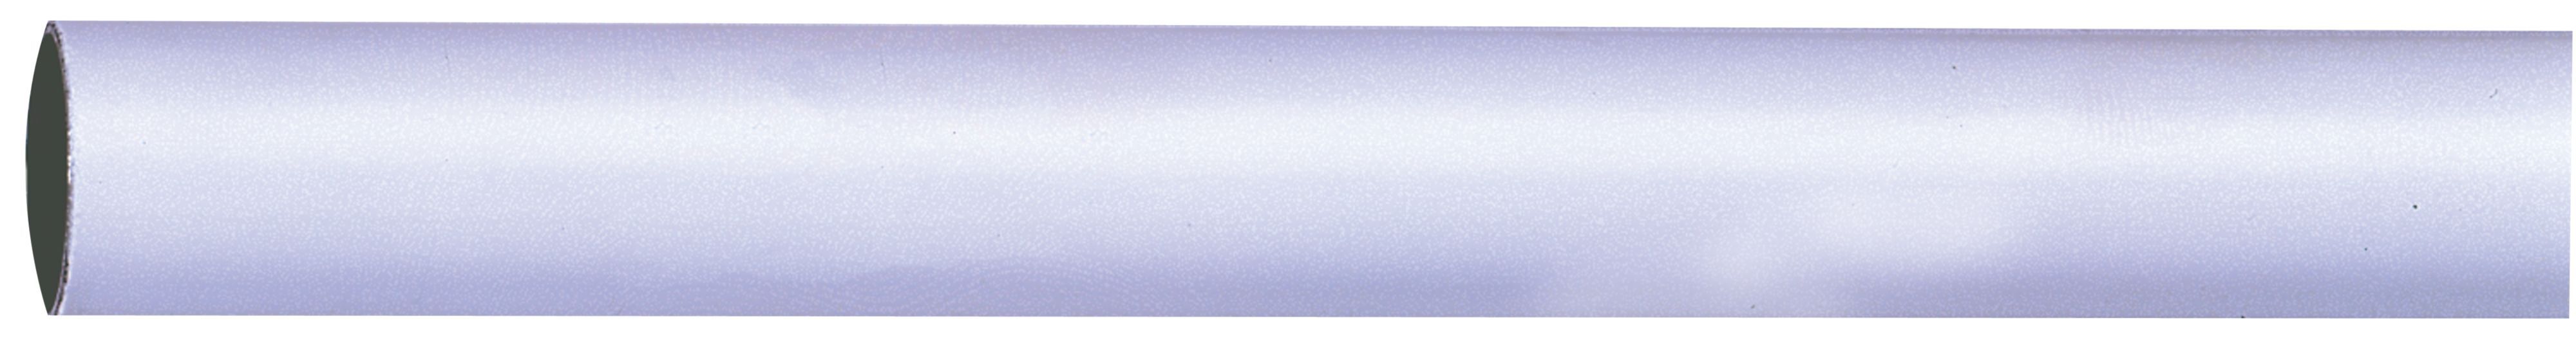 Colorail Steel Round Tube, (L)0.91m (Dia)25mm